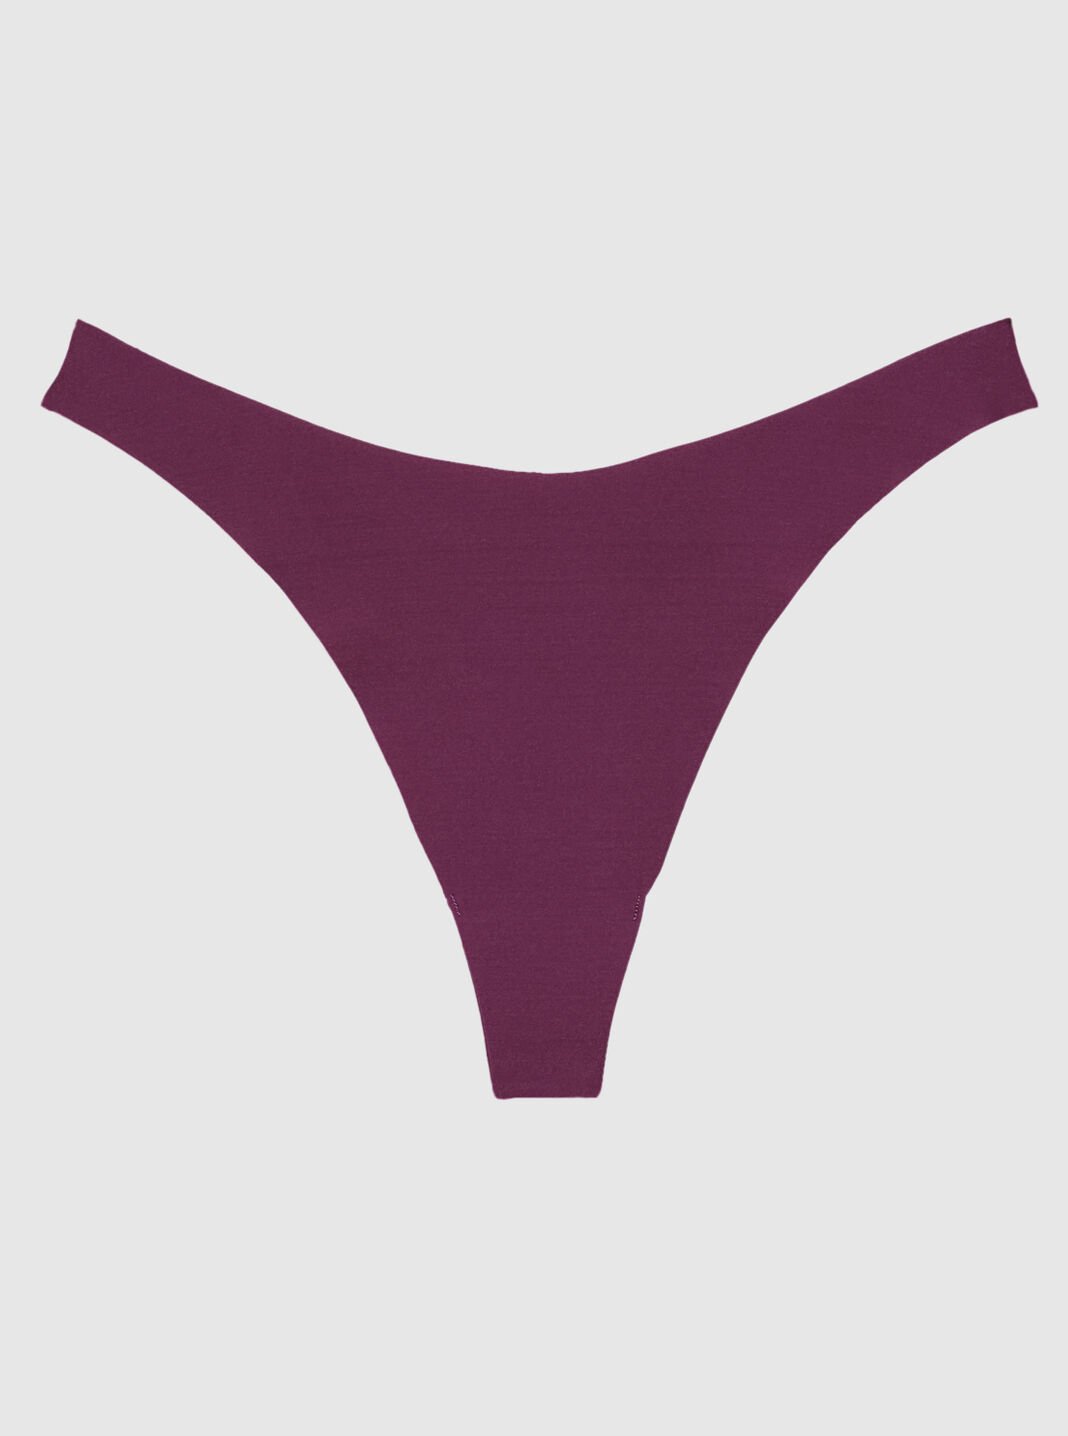 Lucky Brand Women's Underwear - 10 Pack Microfiber Bikini Panties (S-XL),  Size Small, Blue Iris Paisley/Halogen/Blue Iris/Gardenia/Silver Sconce at   Women's Clothing store